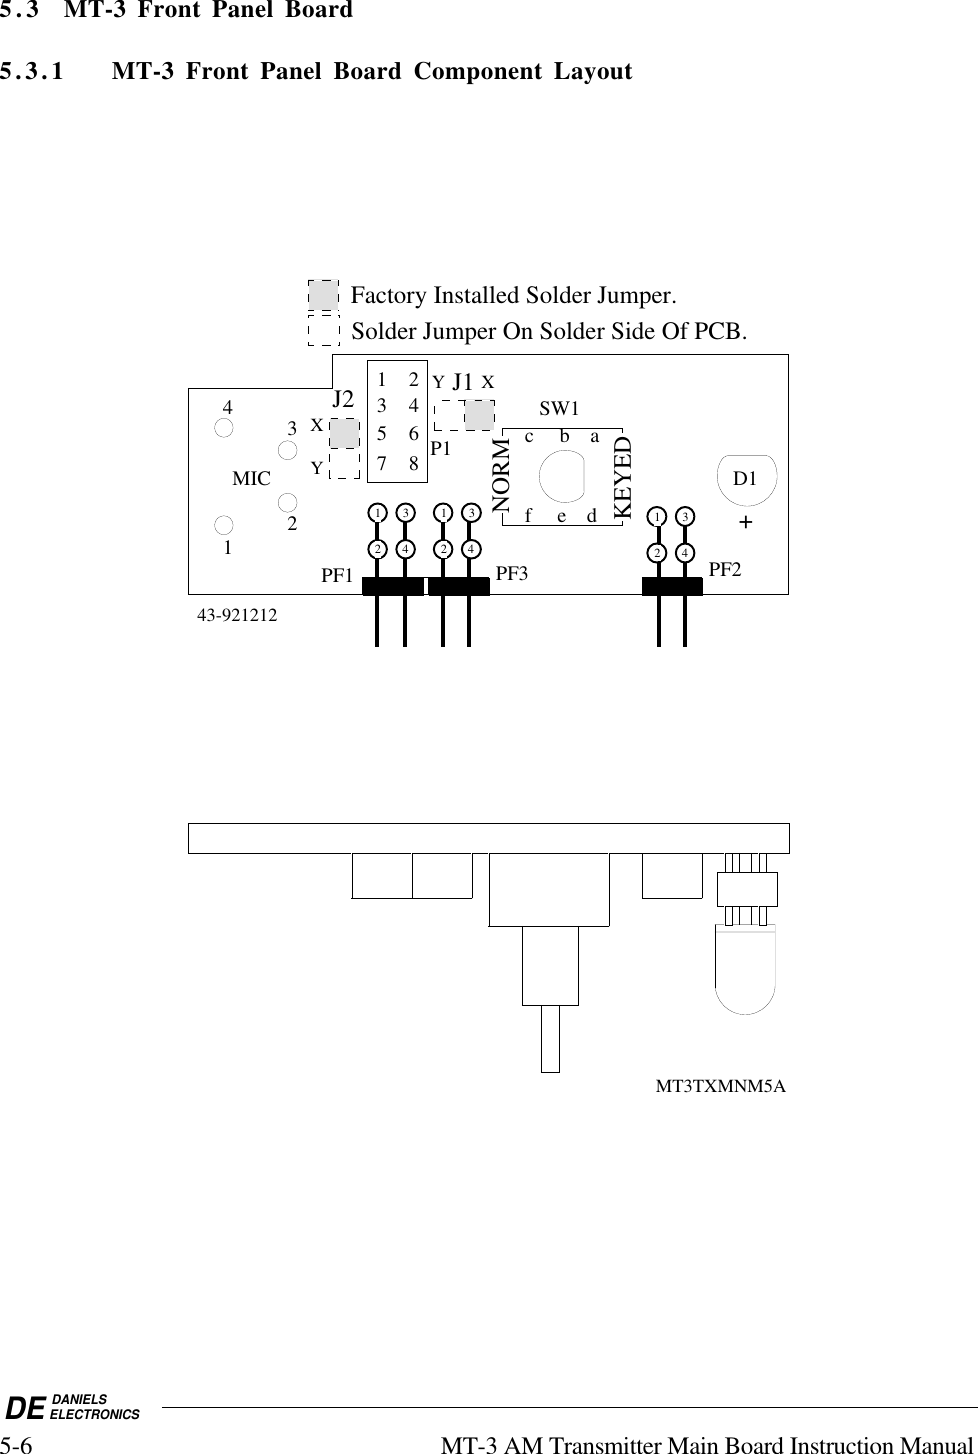 DE DANIELSELECTRONICS5-6 MT-3 AM Transmitter Main Board Instruction Manual5. 3 MT-3 Front Panel Board5.3.1 MT-3 Front Panel Board Component Layout  D1MIC1234PF2SW1PF1+c     b    af     e    dKEYEDNORM  J1YXSolder Jumper On Solder Side Of PCB.Factory Installed Solder Jumper.MT3TXMNM5APF3J2YX43-921212P121436587123412341234